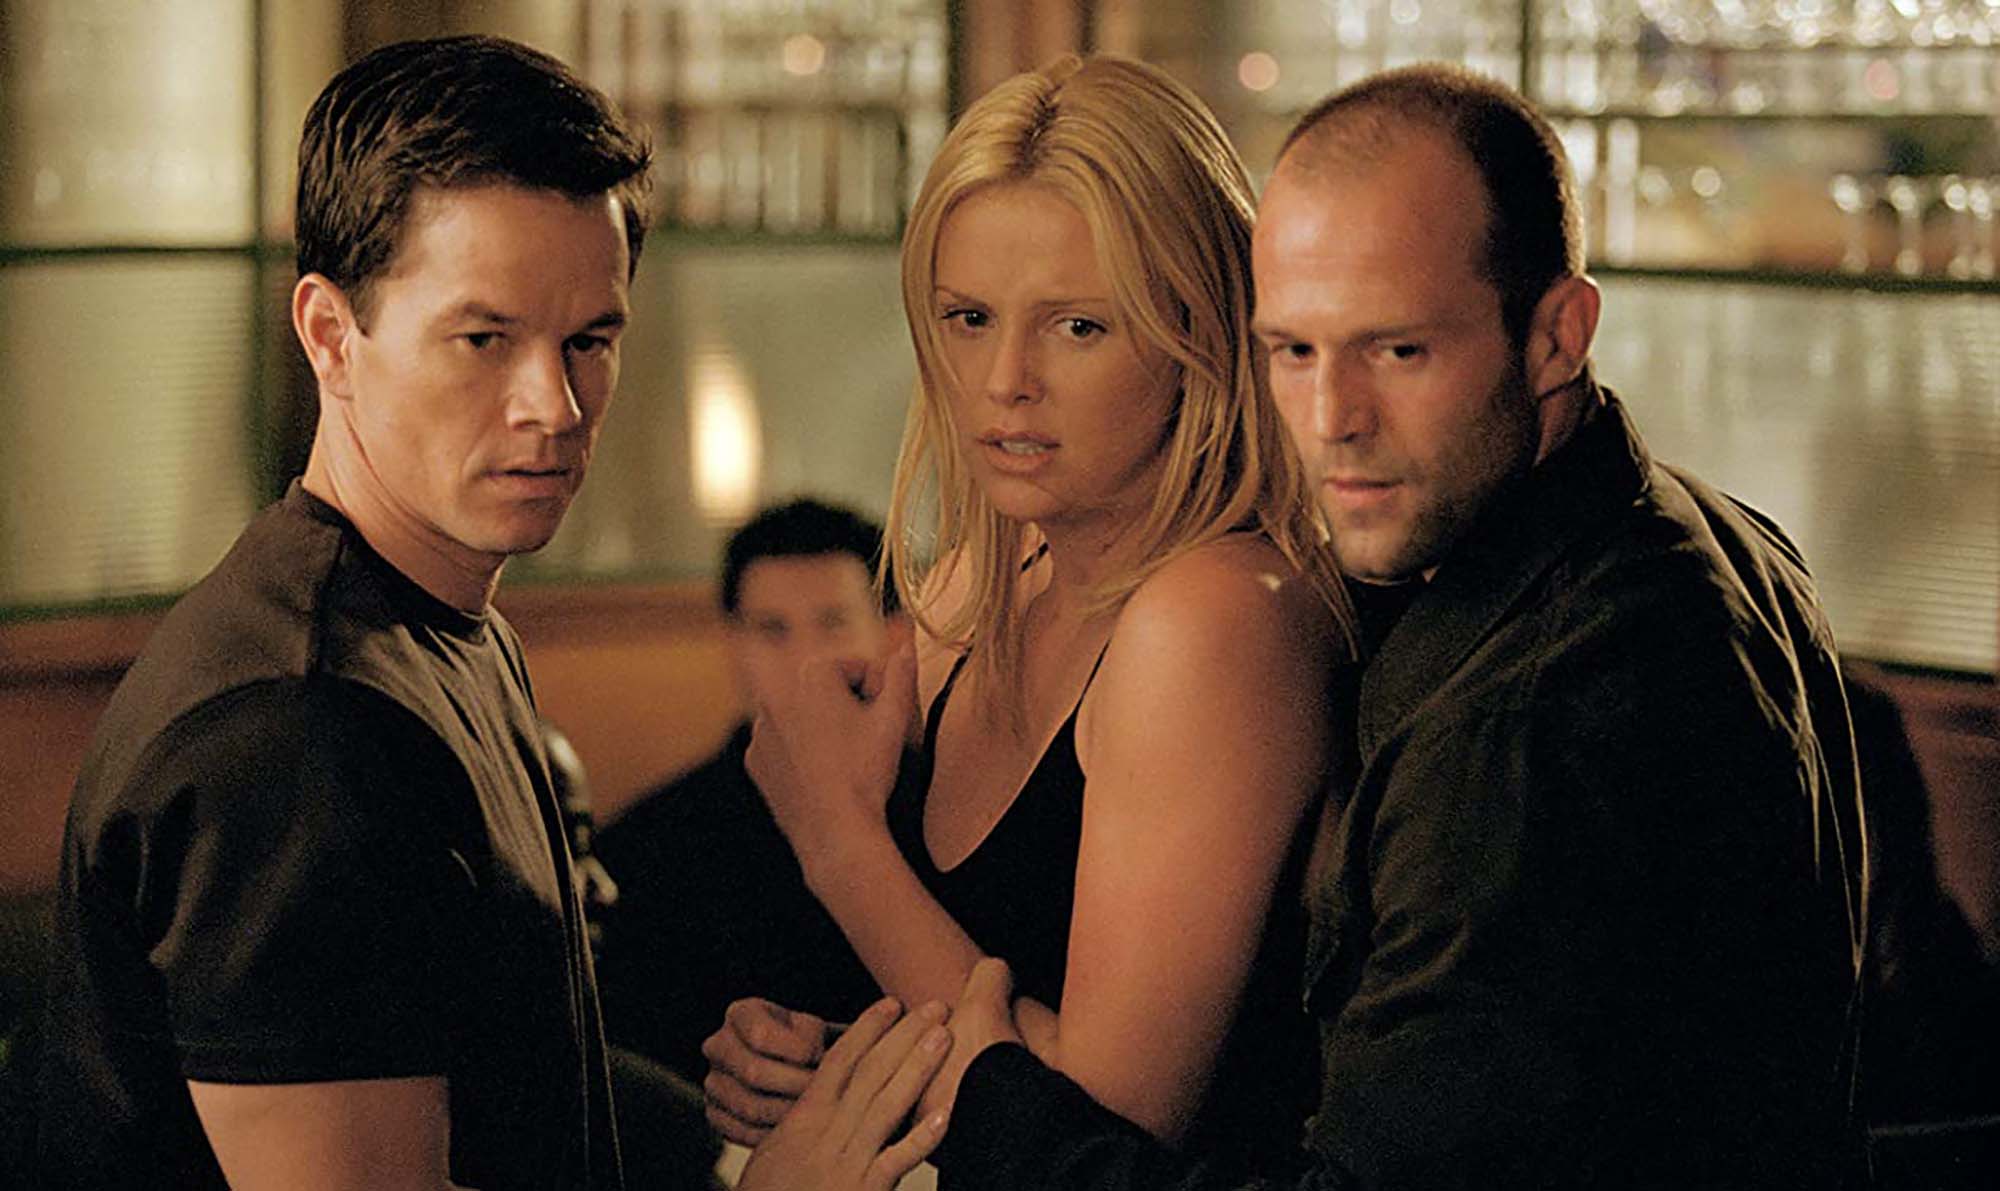 The Italian Job starring Mark Wahlberg, Charlize Theron, and Jason Statham